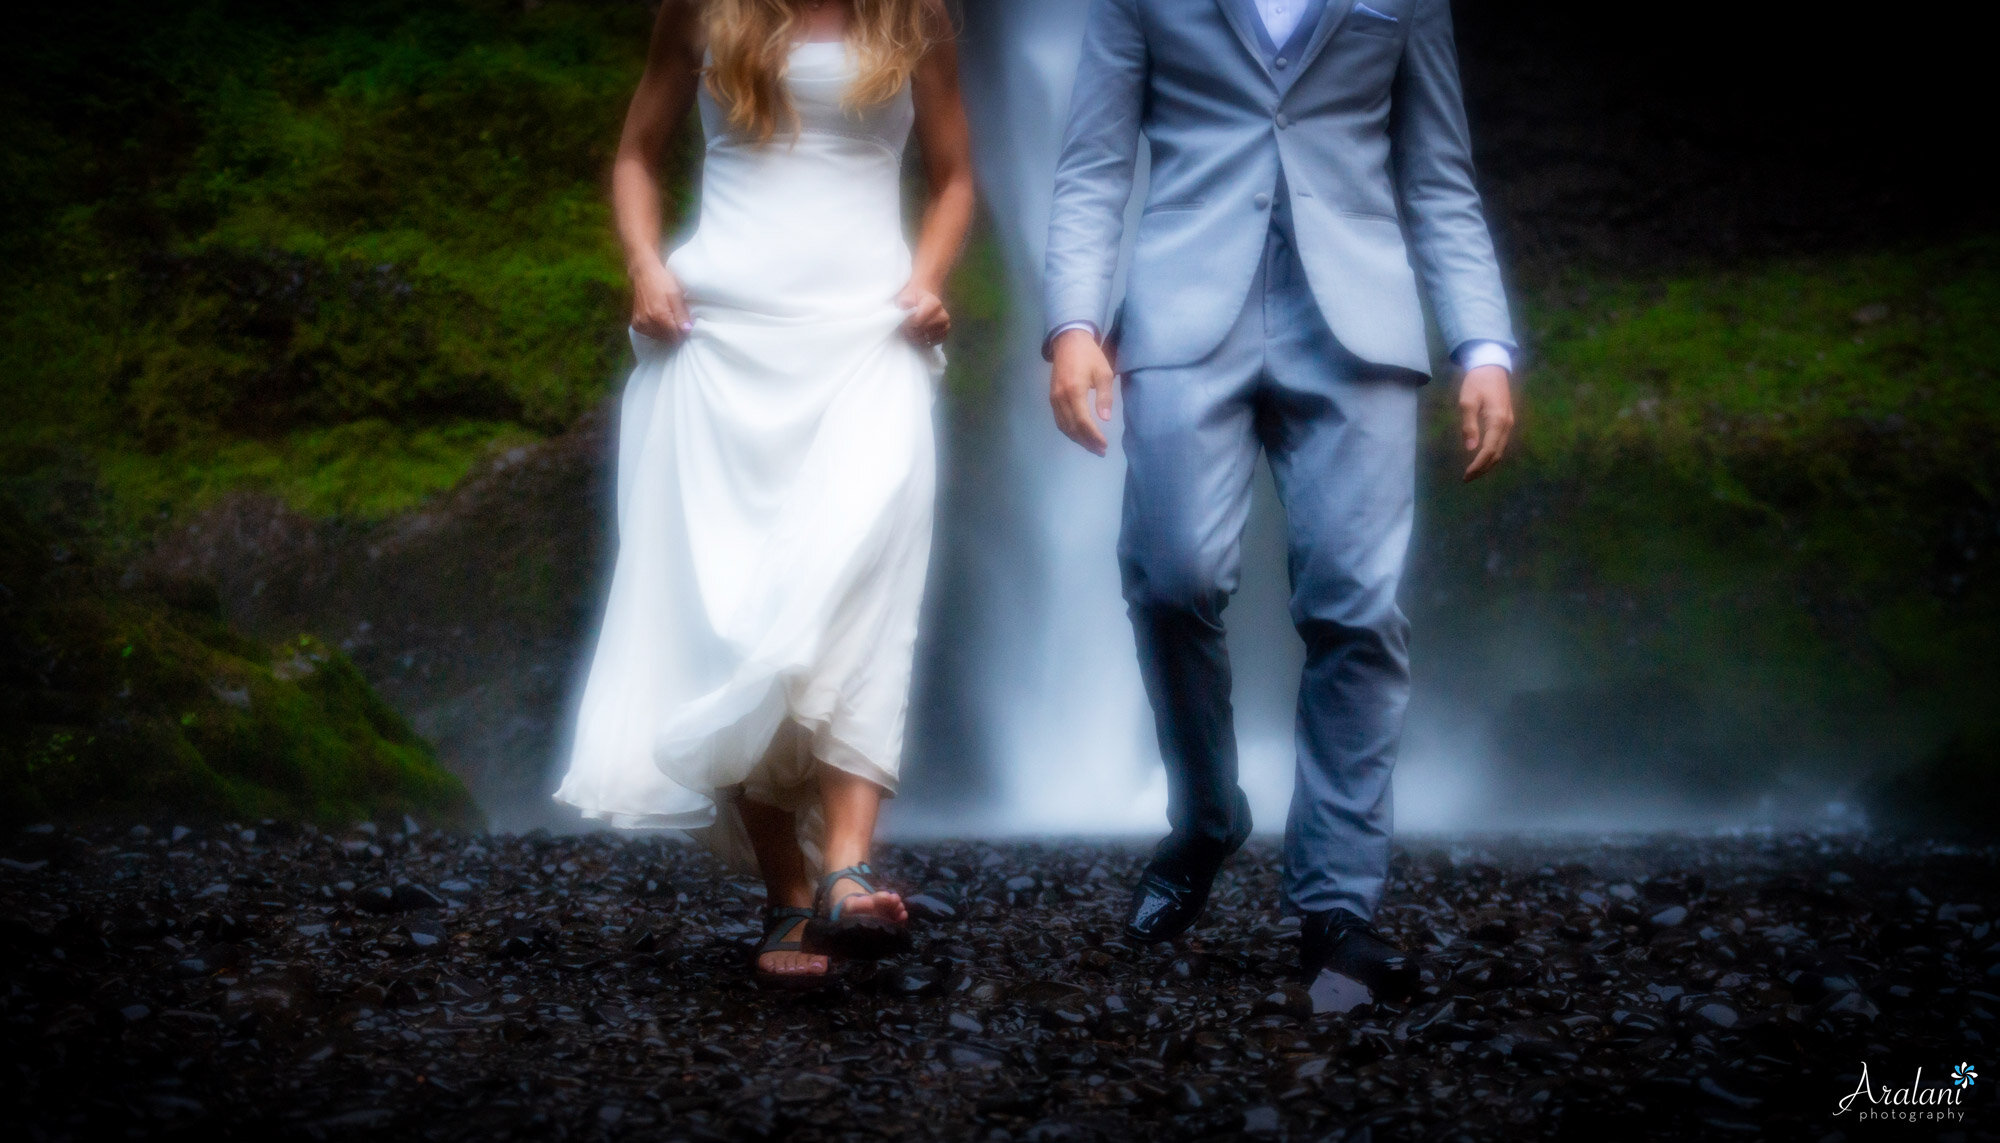 Courtney-Jimmy-037-Columbia-River-Gorge-Government-Cove-Latourell-Falls-Oregon-Wedding-Elopement-Photographer-Aralani-Photography-Courtney_Jimmy_W0253.jpg